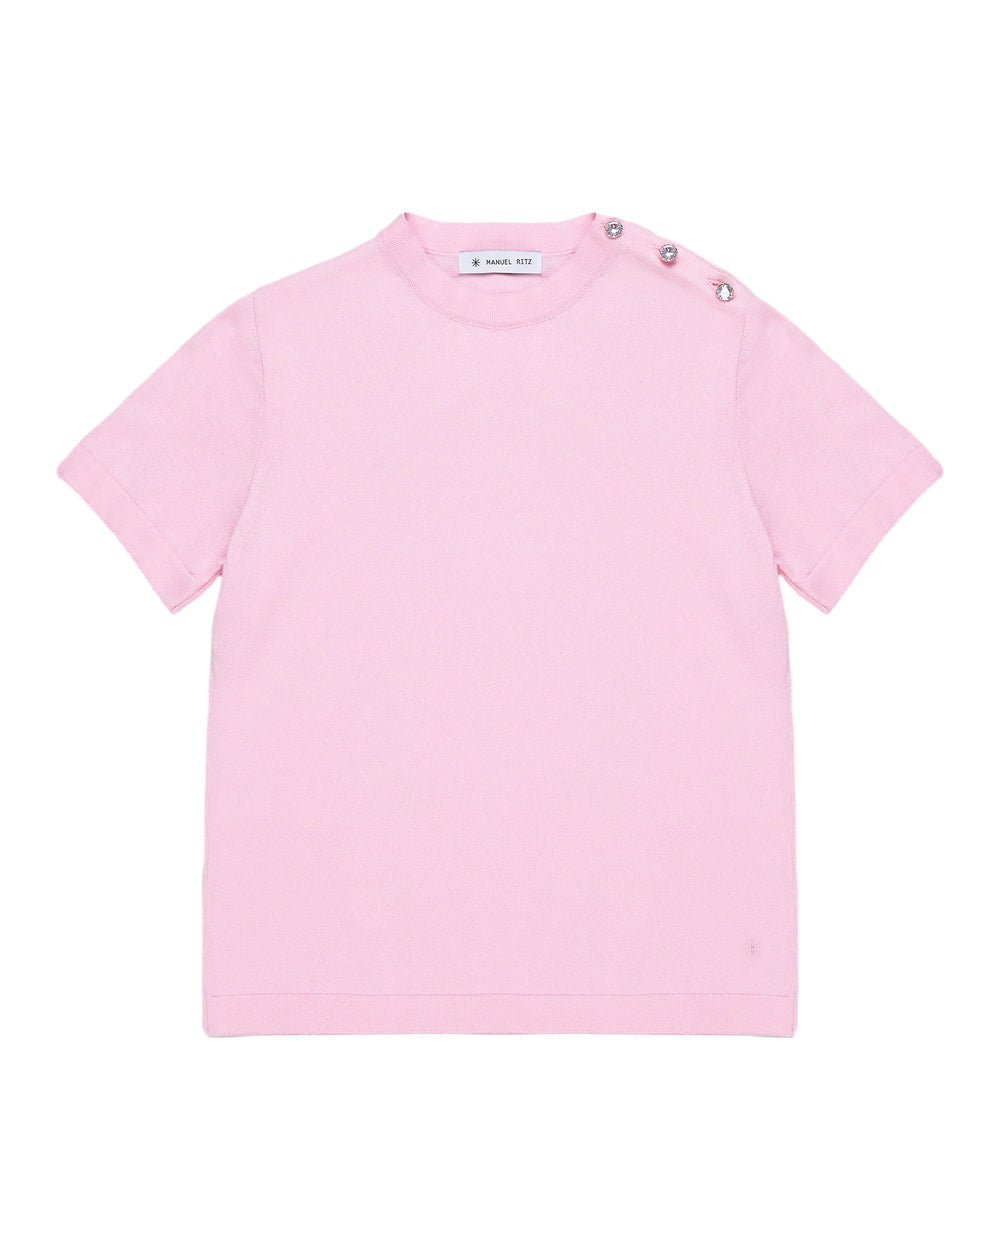 pink jewel detail cotton jersey